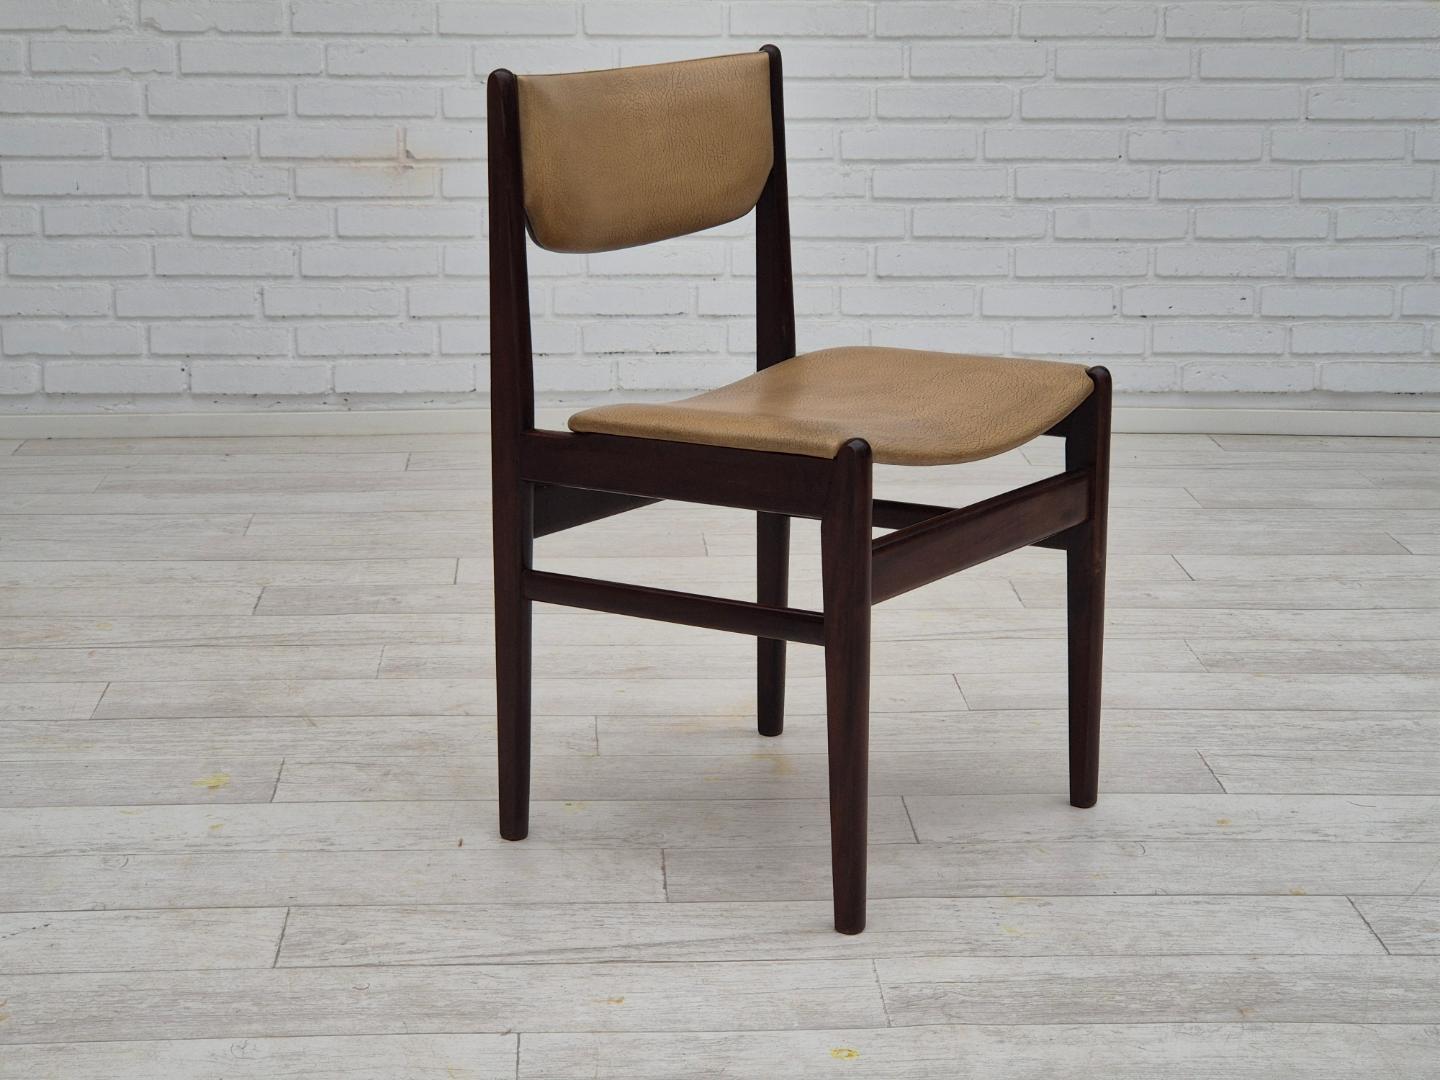 1970s, set of 5 Danish dinning chairs, original condition, teak wood, leather.